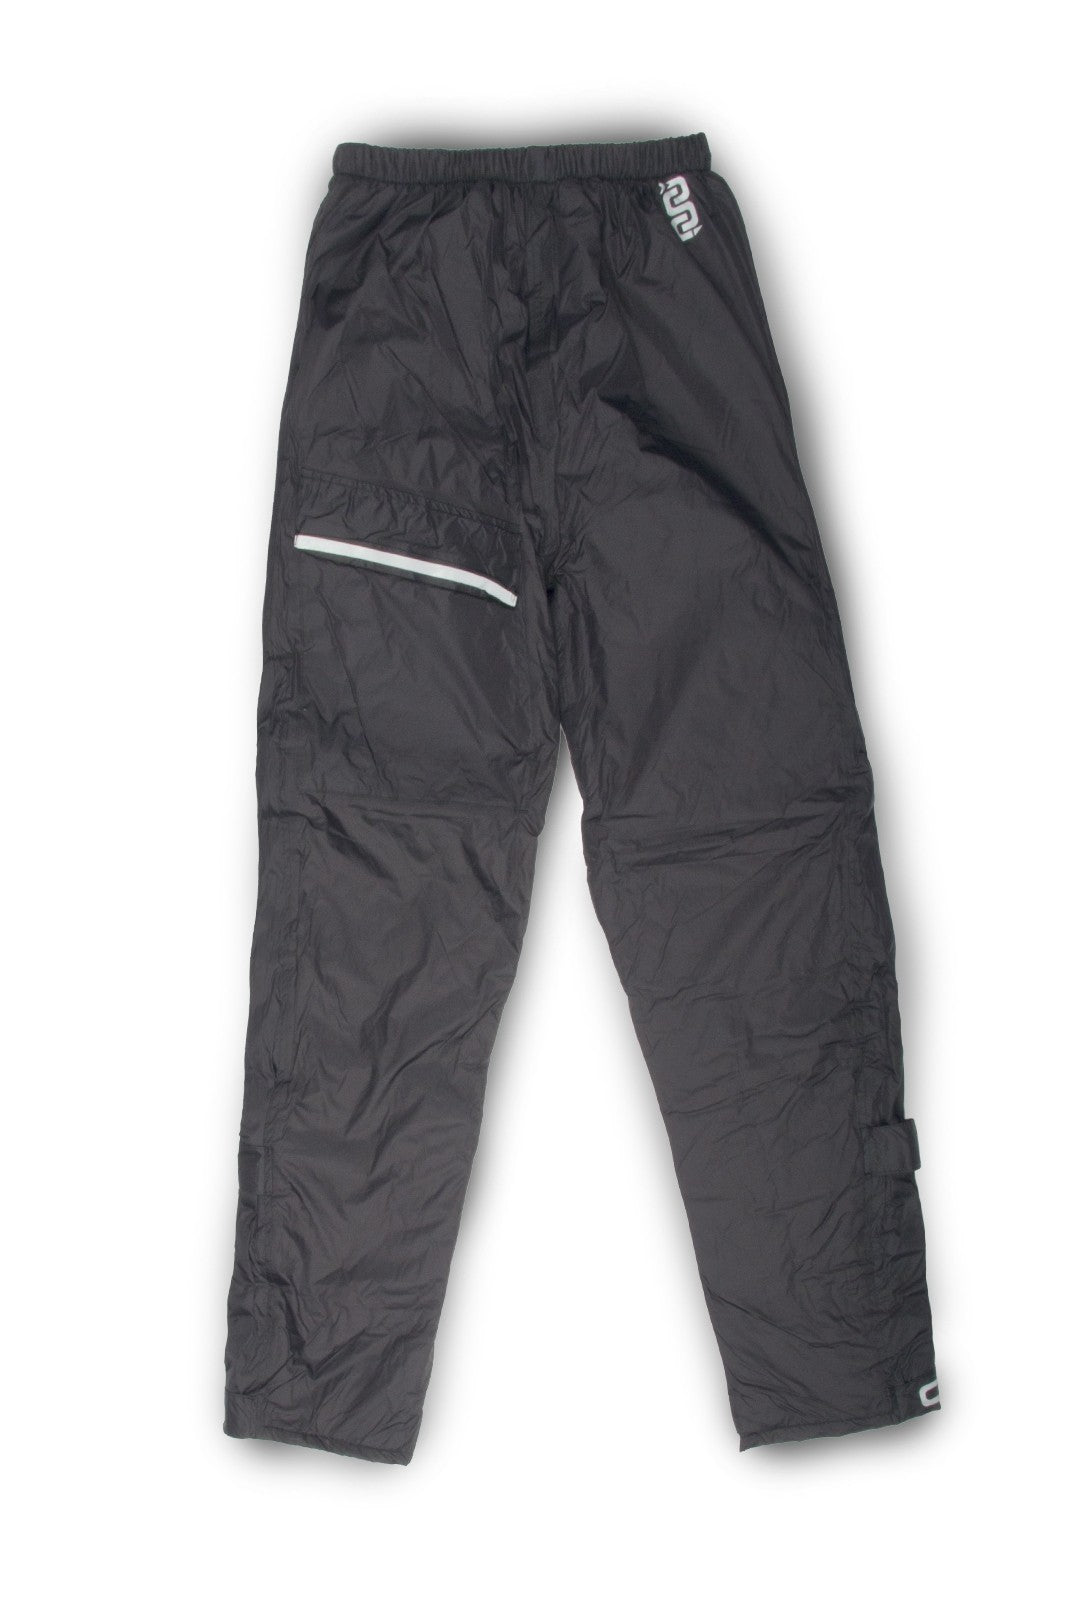 Pantalone moto OJ SOFT PANT compatto caldo antipioggia - OnTheRoad.shop - OJ